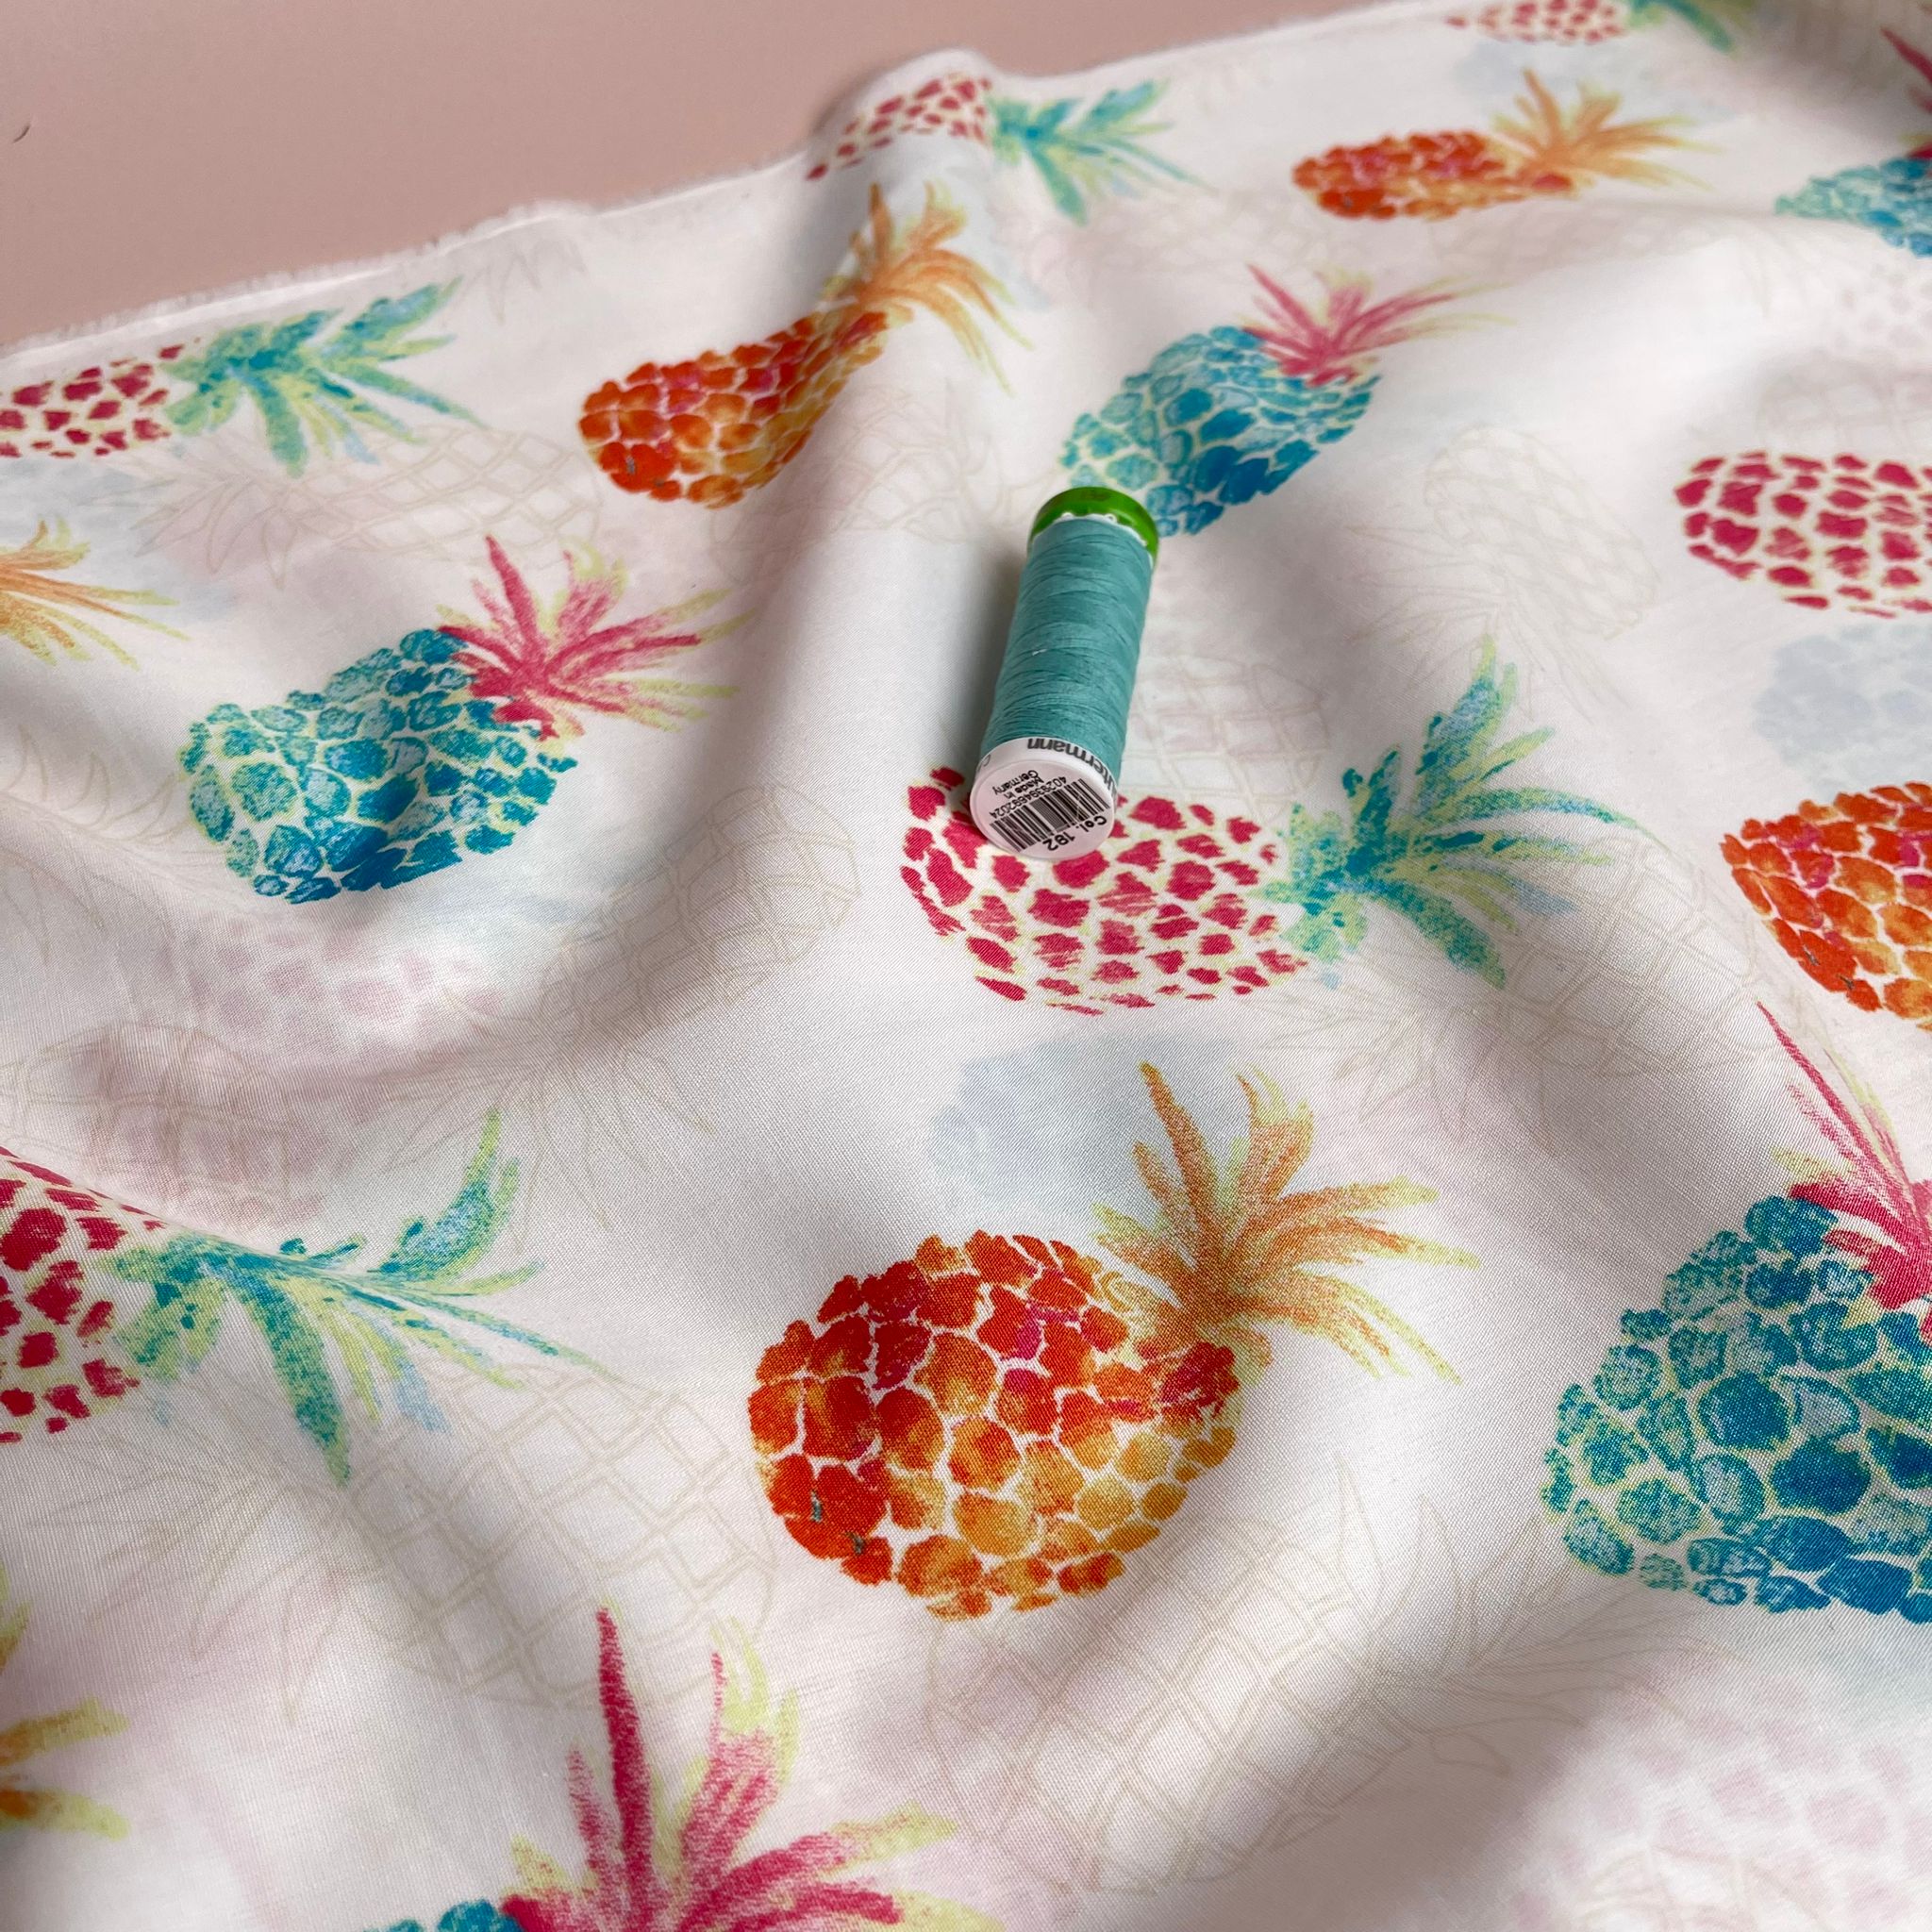 Ex-Designer Tropical Pineapples Cotton Poplin Fabric